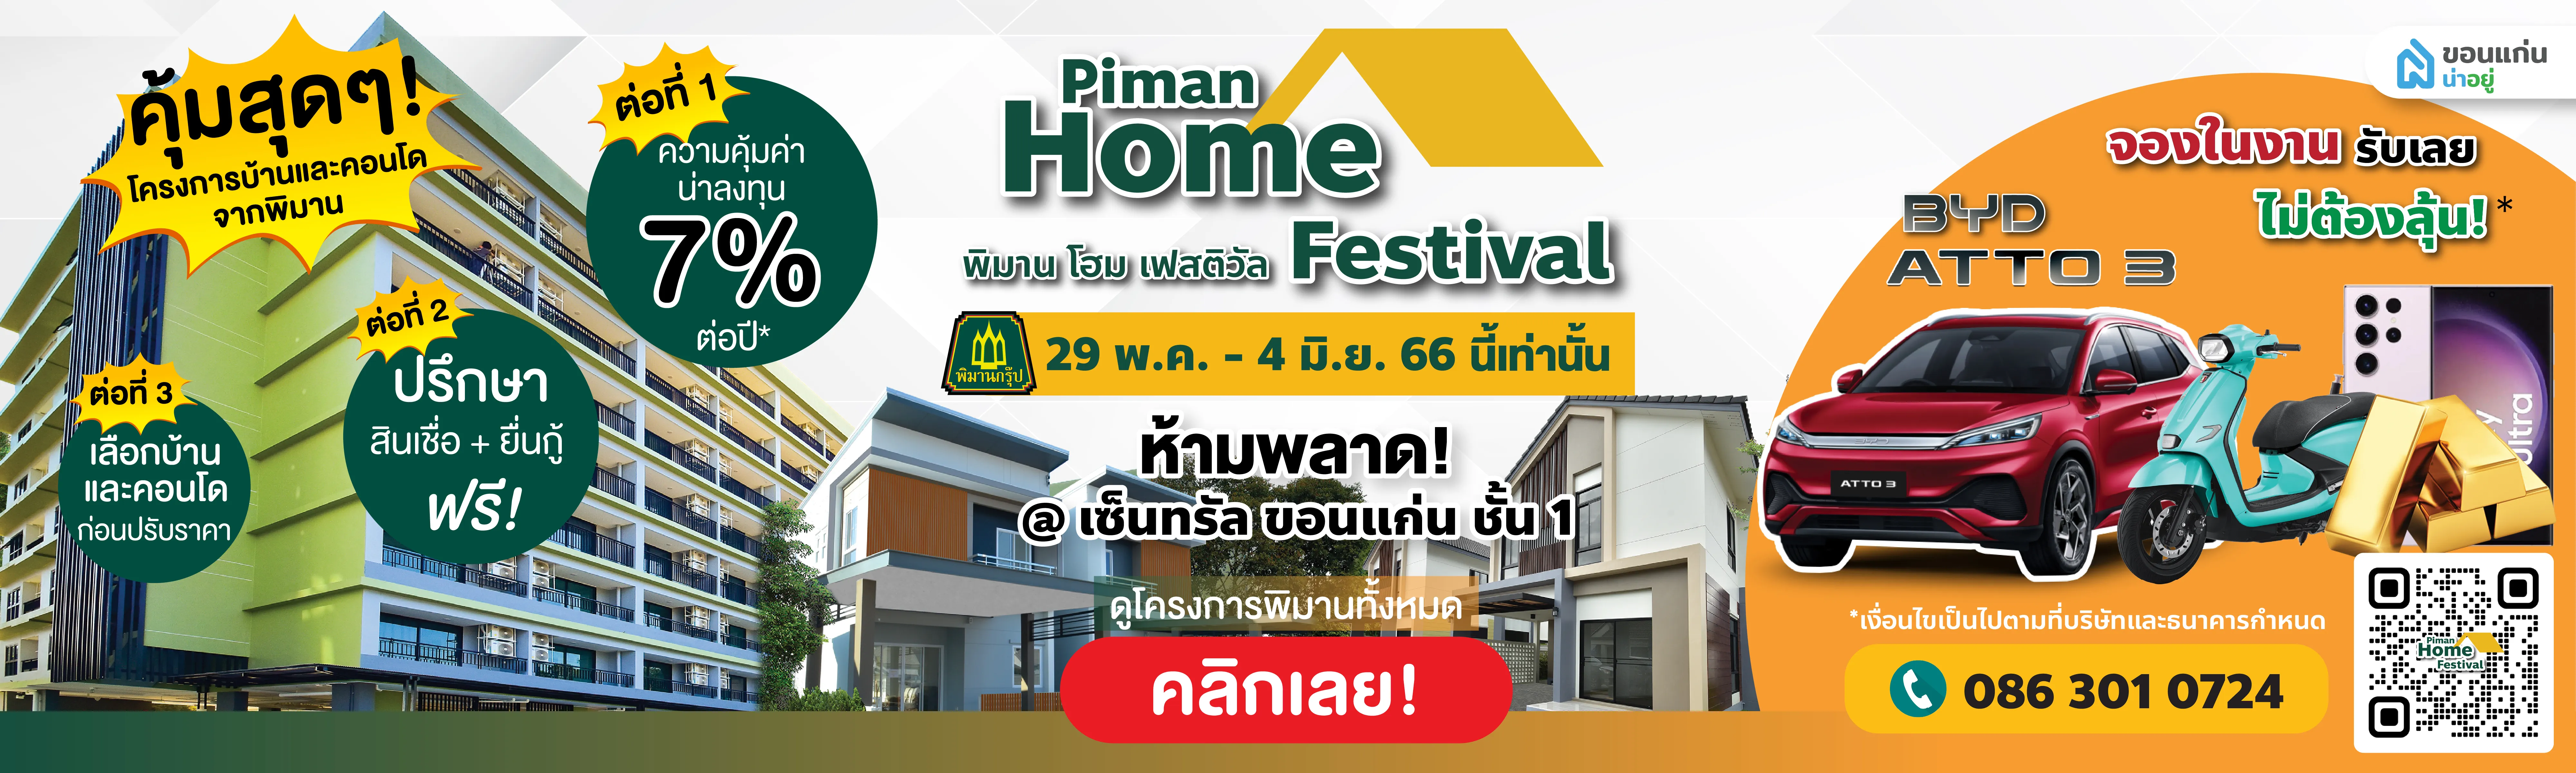 Piman Home Festival